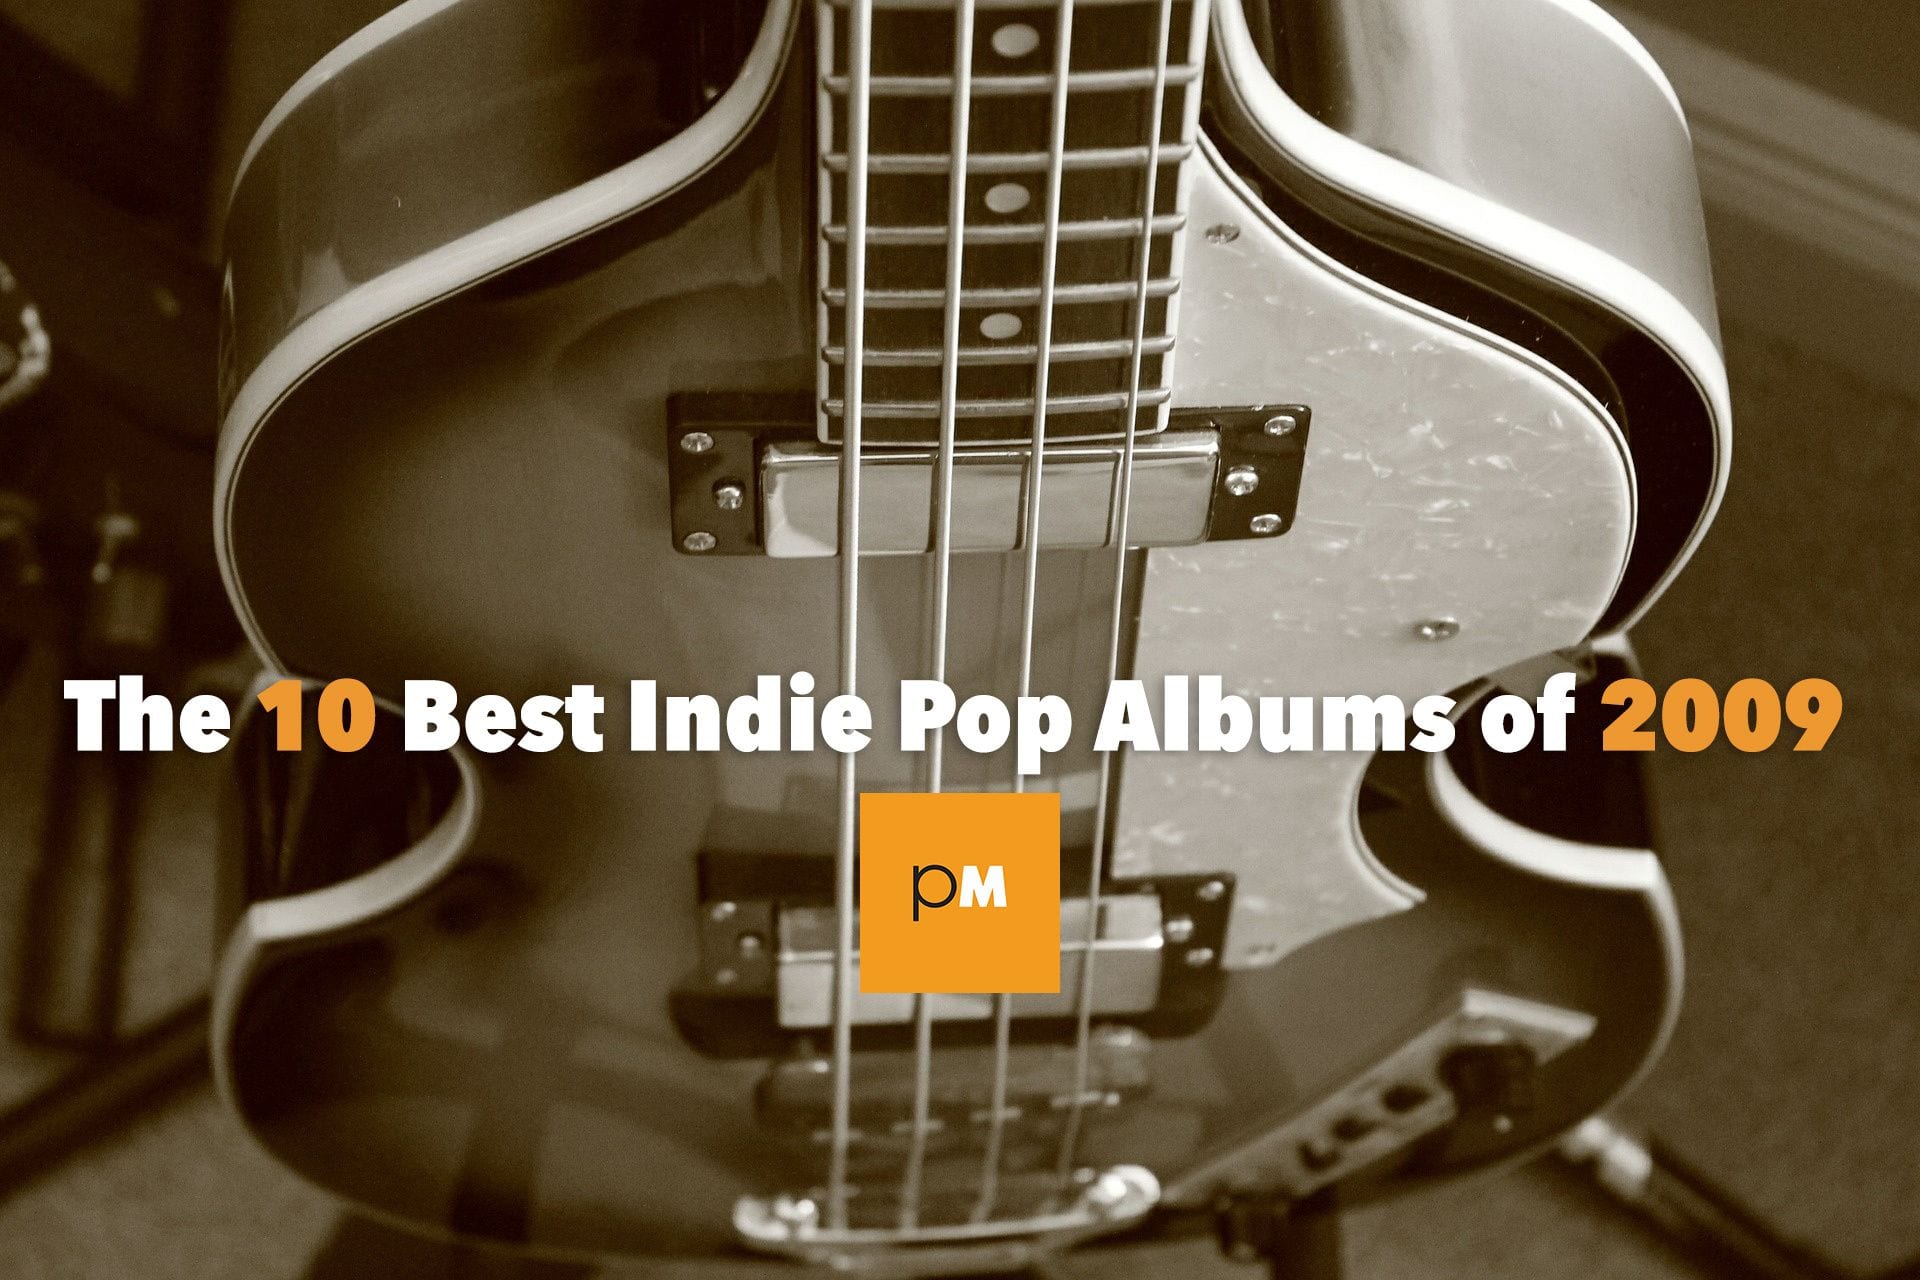 The 10 Best Indie Pop Albums of 2009